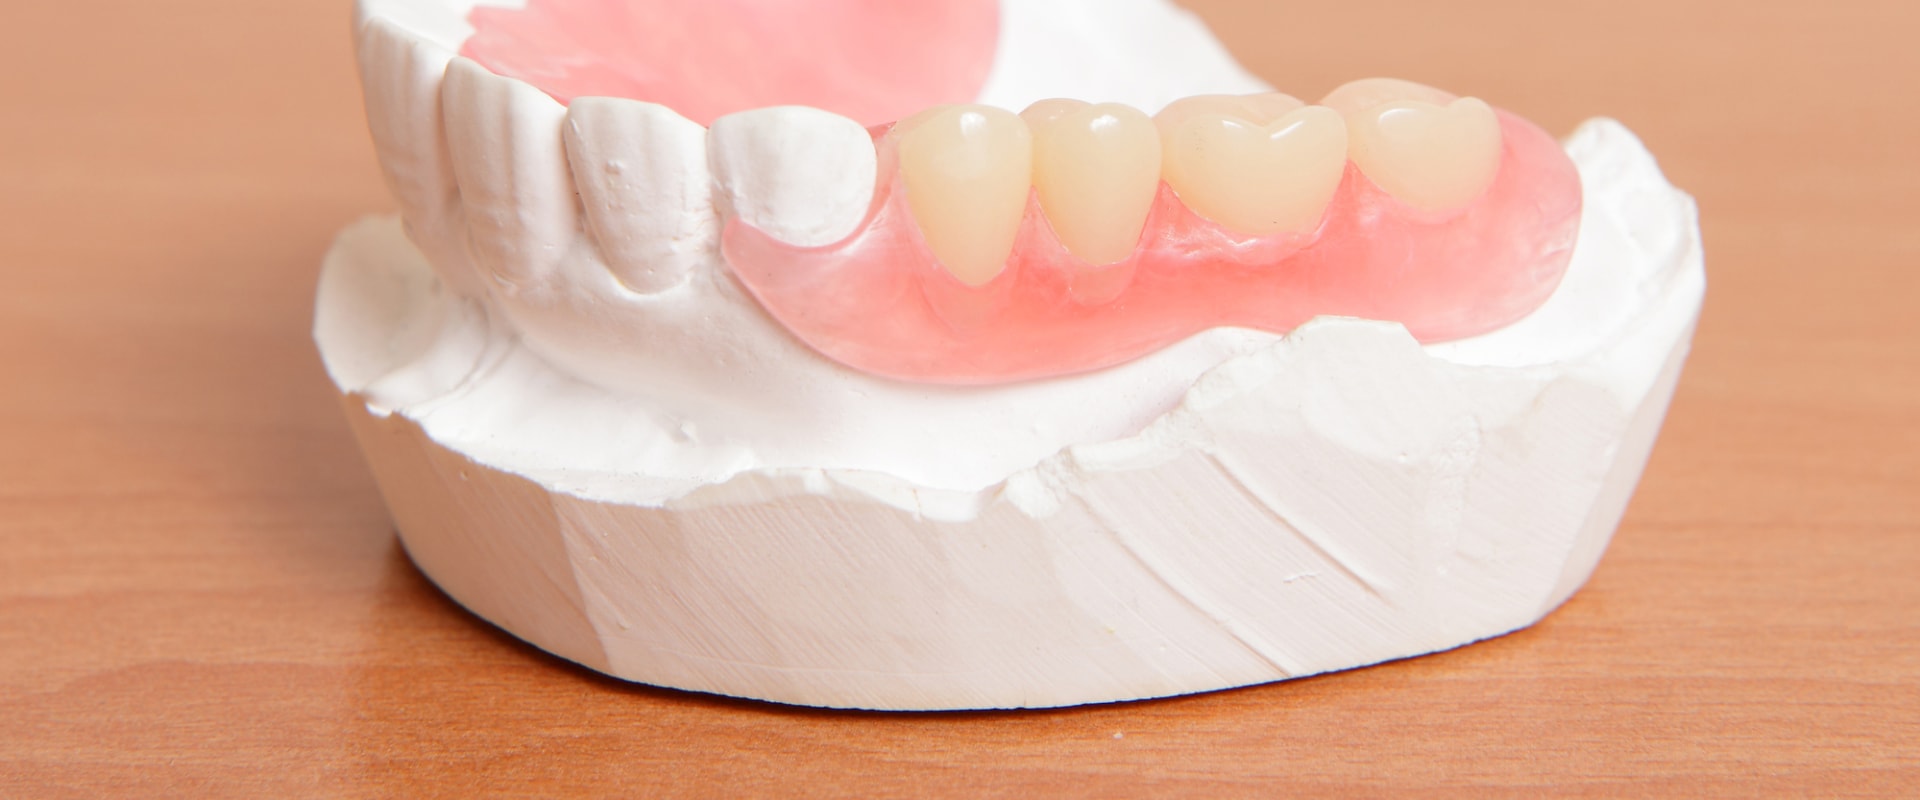 Can children get dentures?